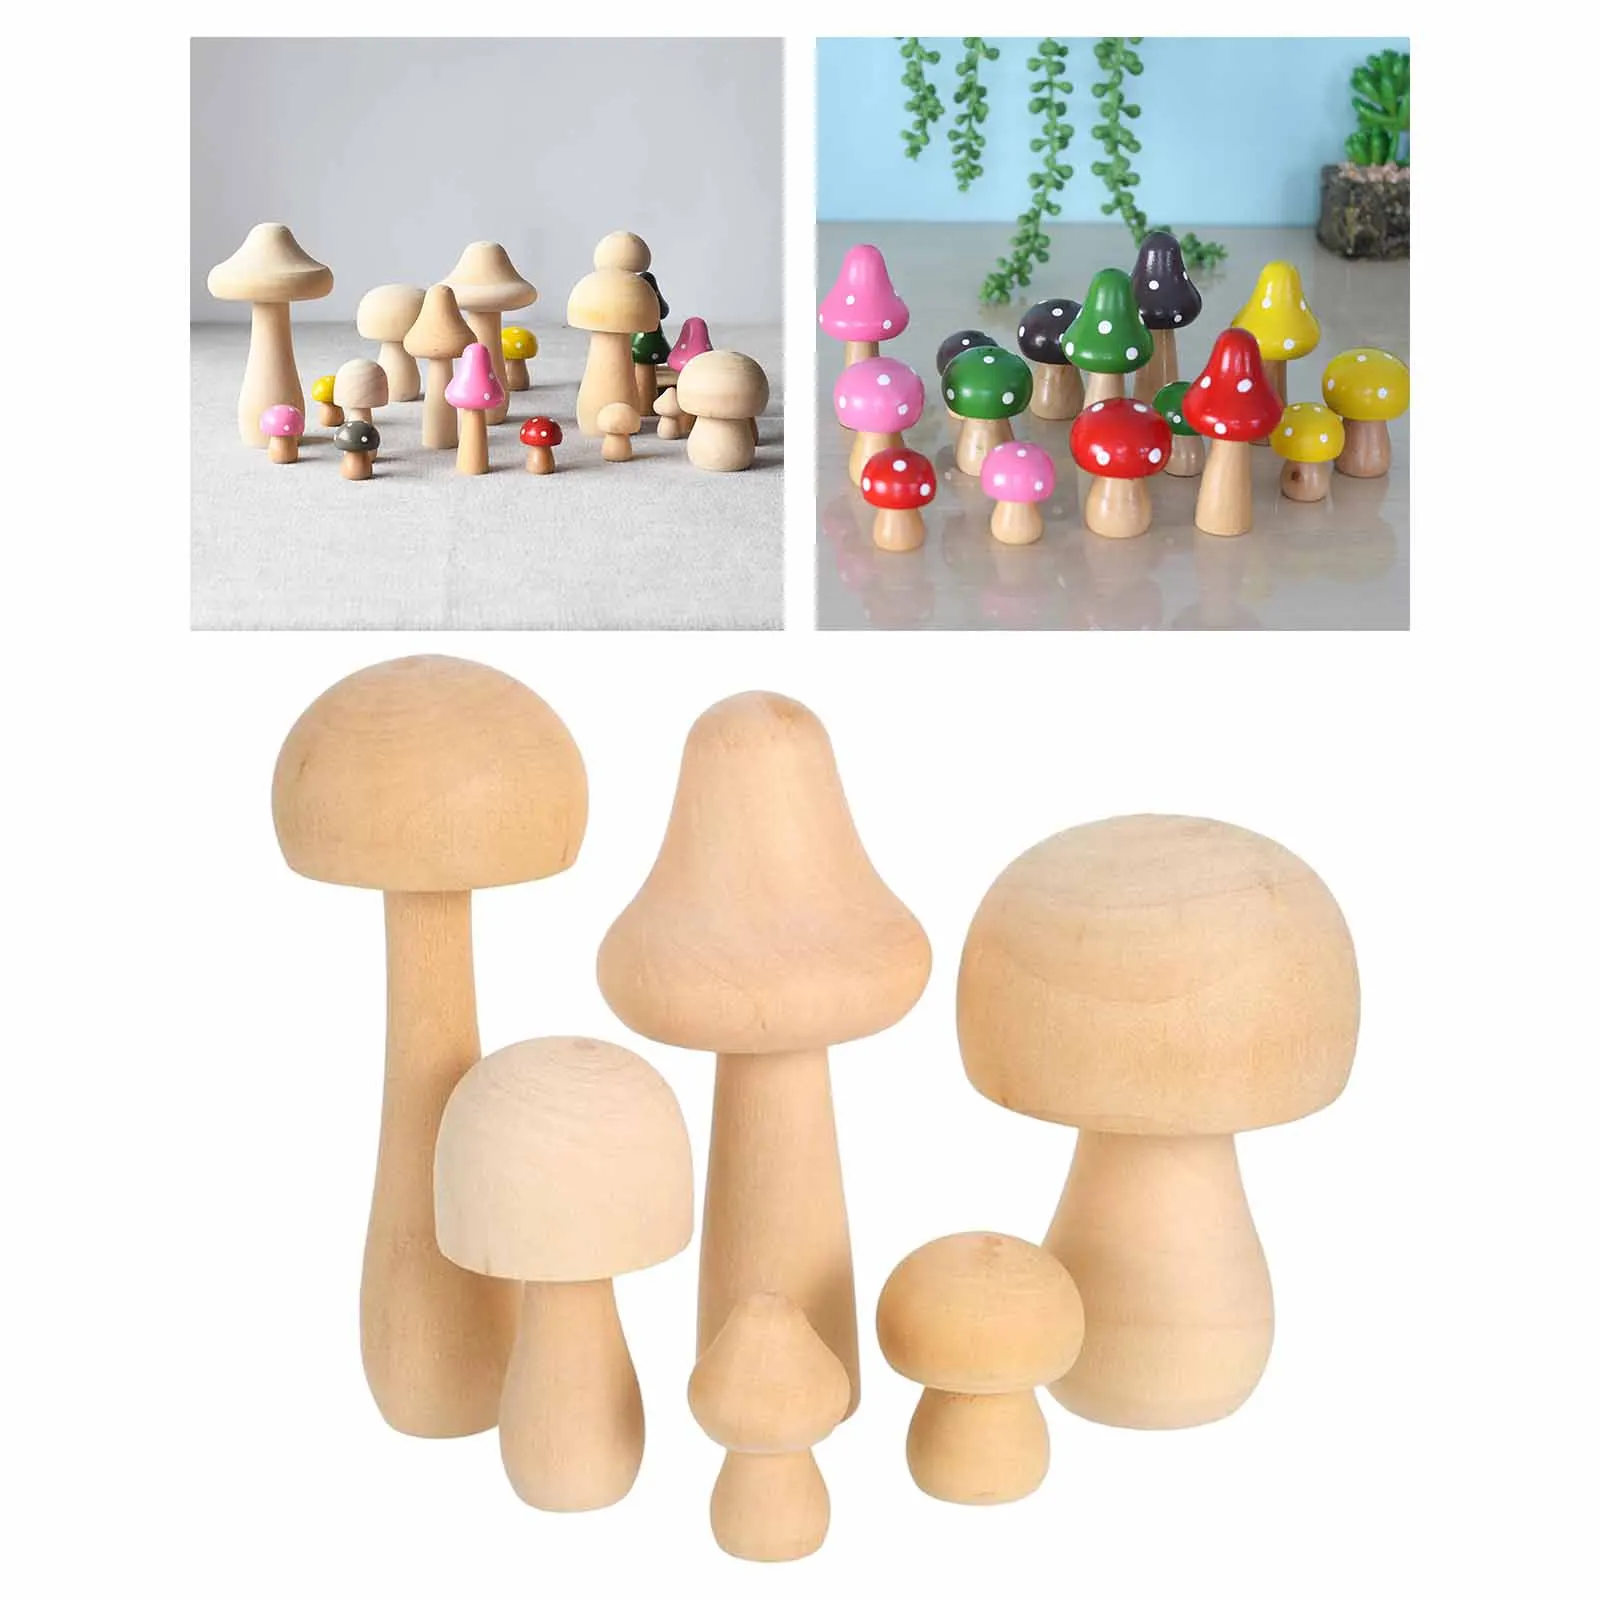 Set of 6 Unfinished Wooden Mushroom Unpainted Peg Dolls Toys Arts DIY Painting Landscape Planter Decor